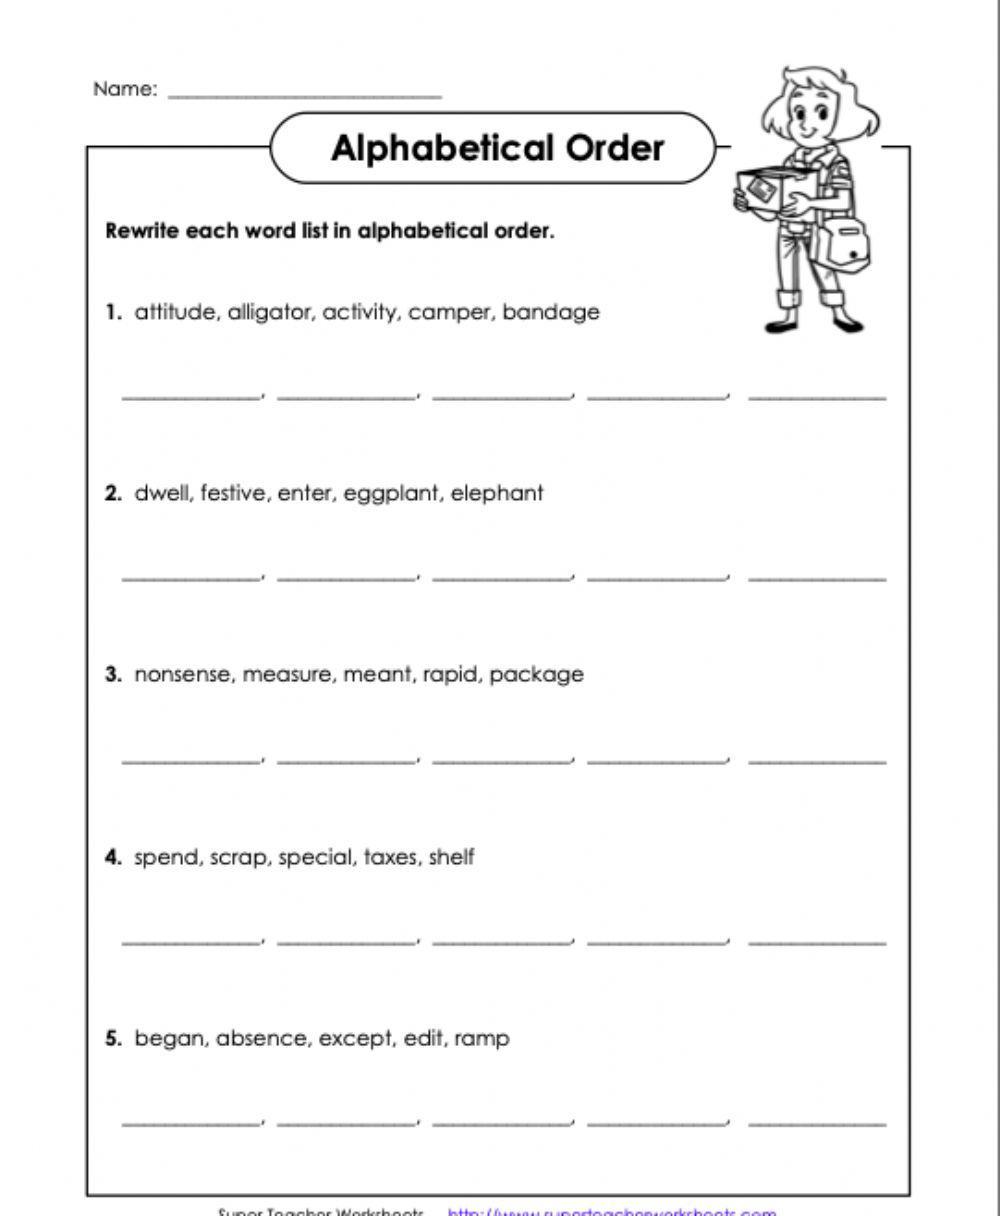 Alphabetical Order D1 5th Grade